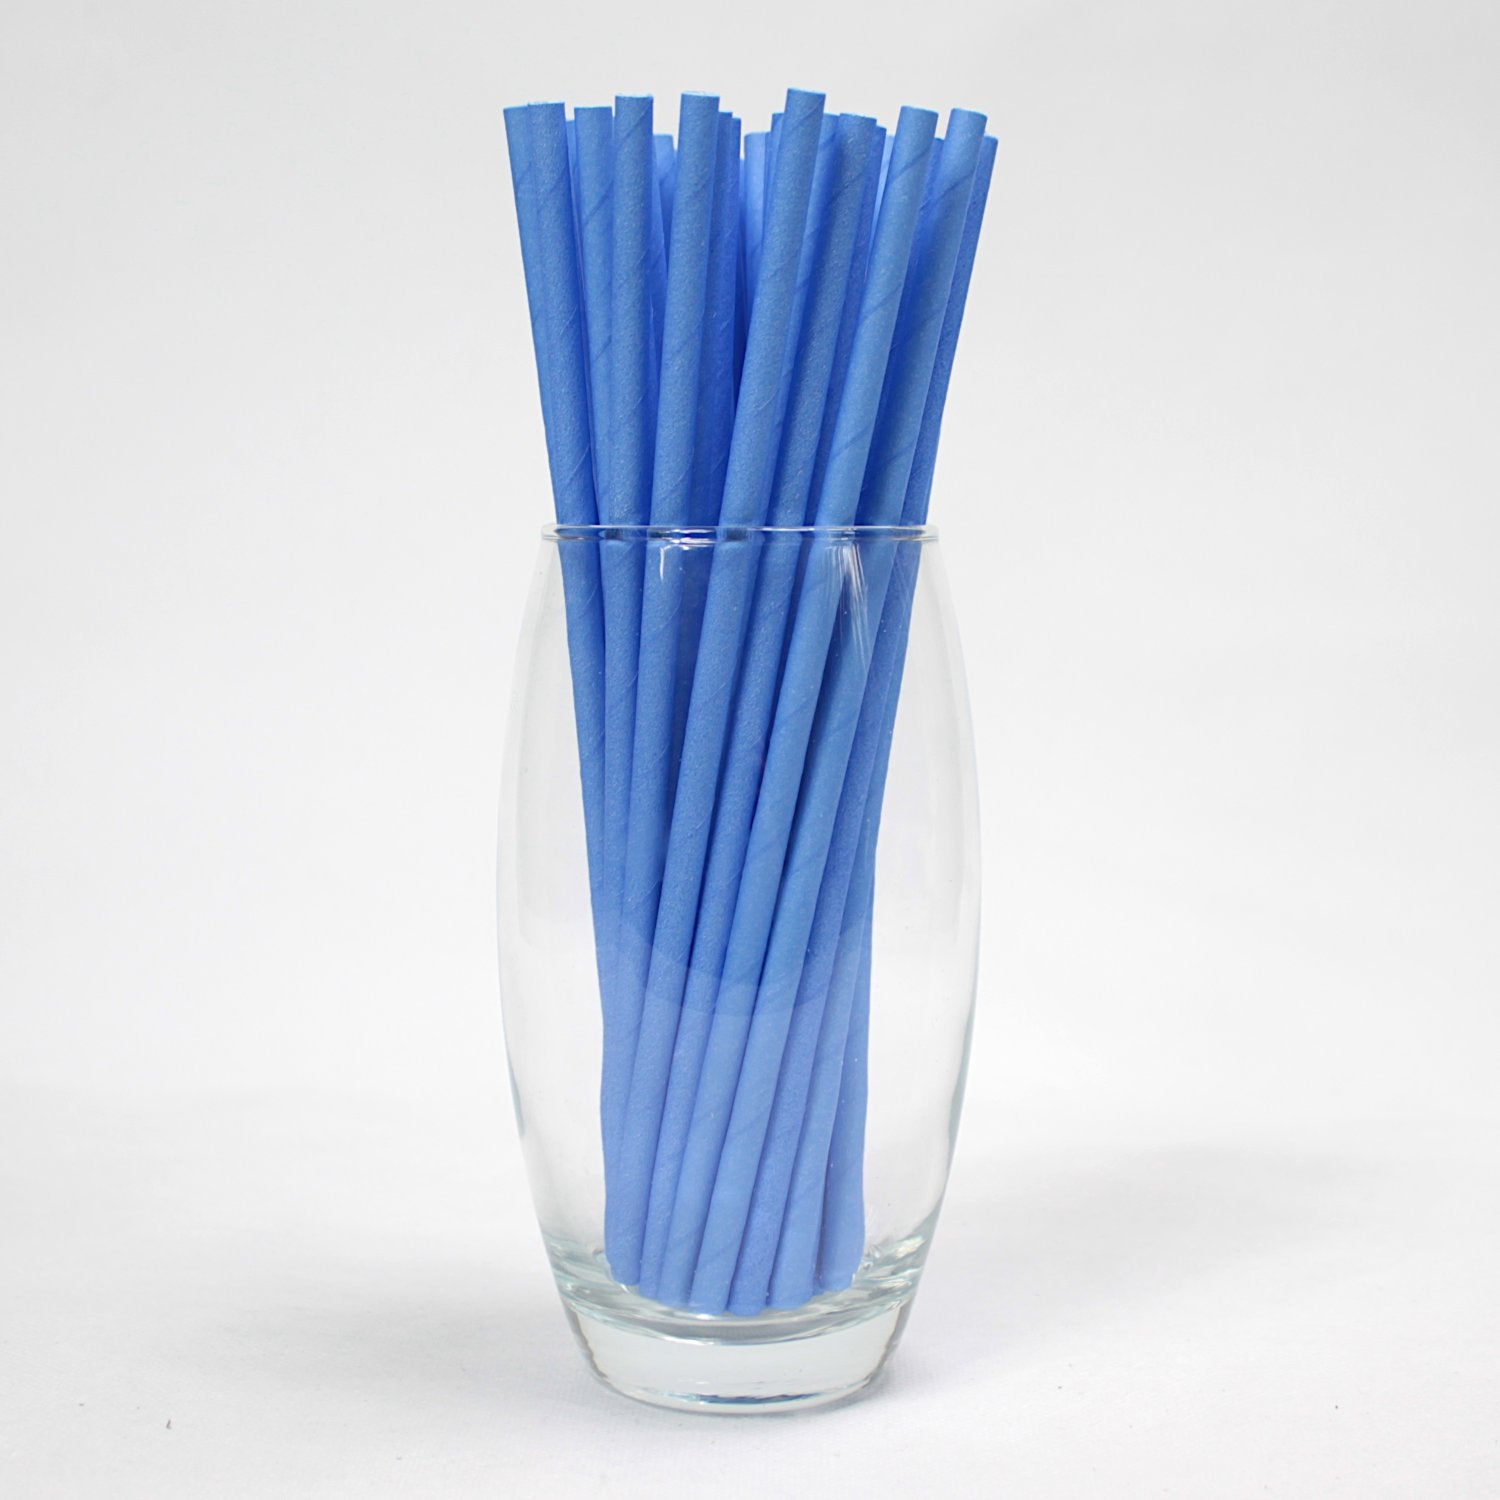 Blue Paper Straws (6mm x 200mm) - Quality Drinking Straws - Intrinsic Paper Straws